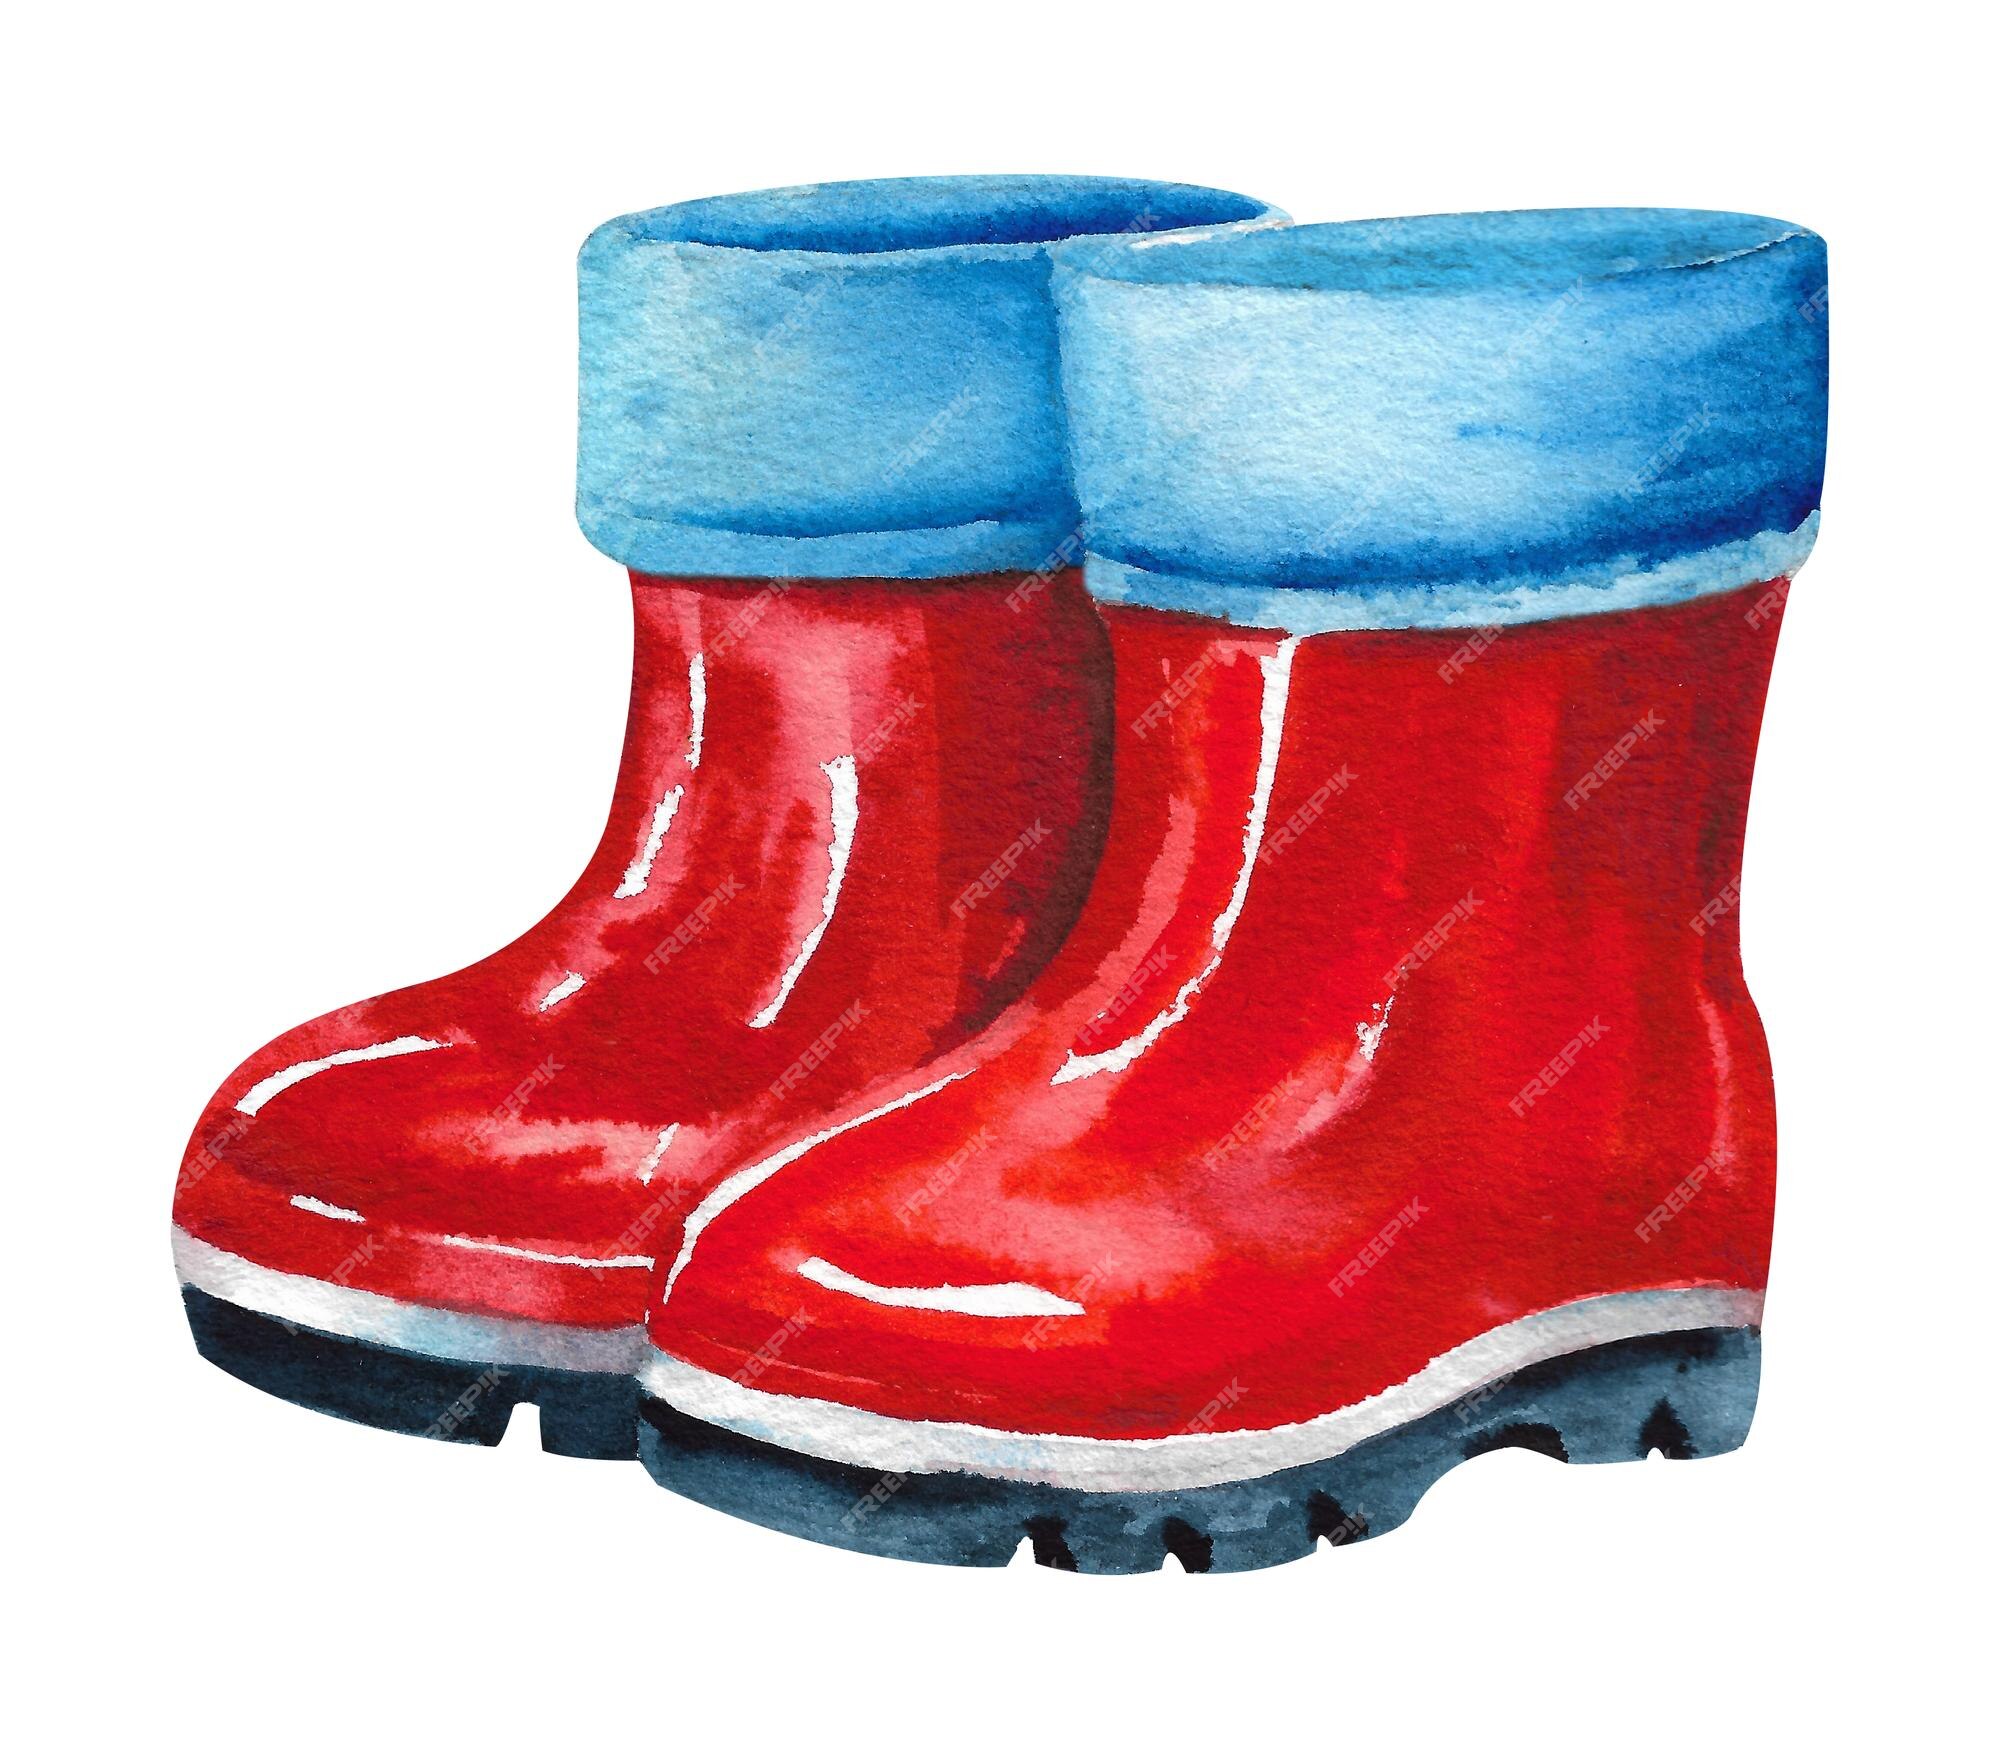 Botas de agua botas agua rojas con cuello azul | Foto Premium